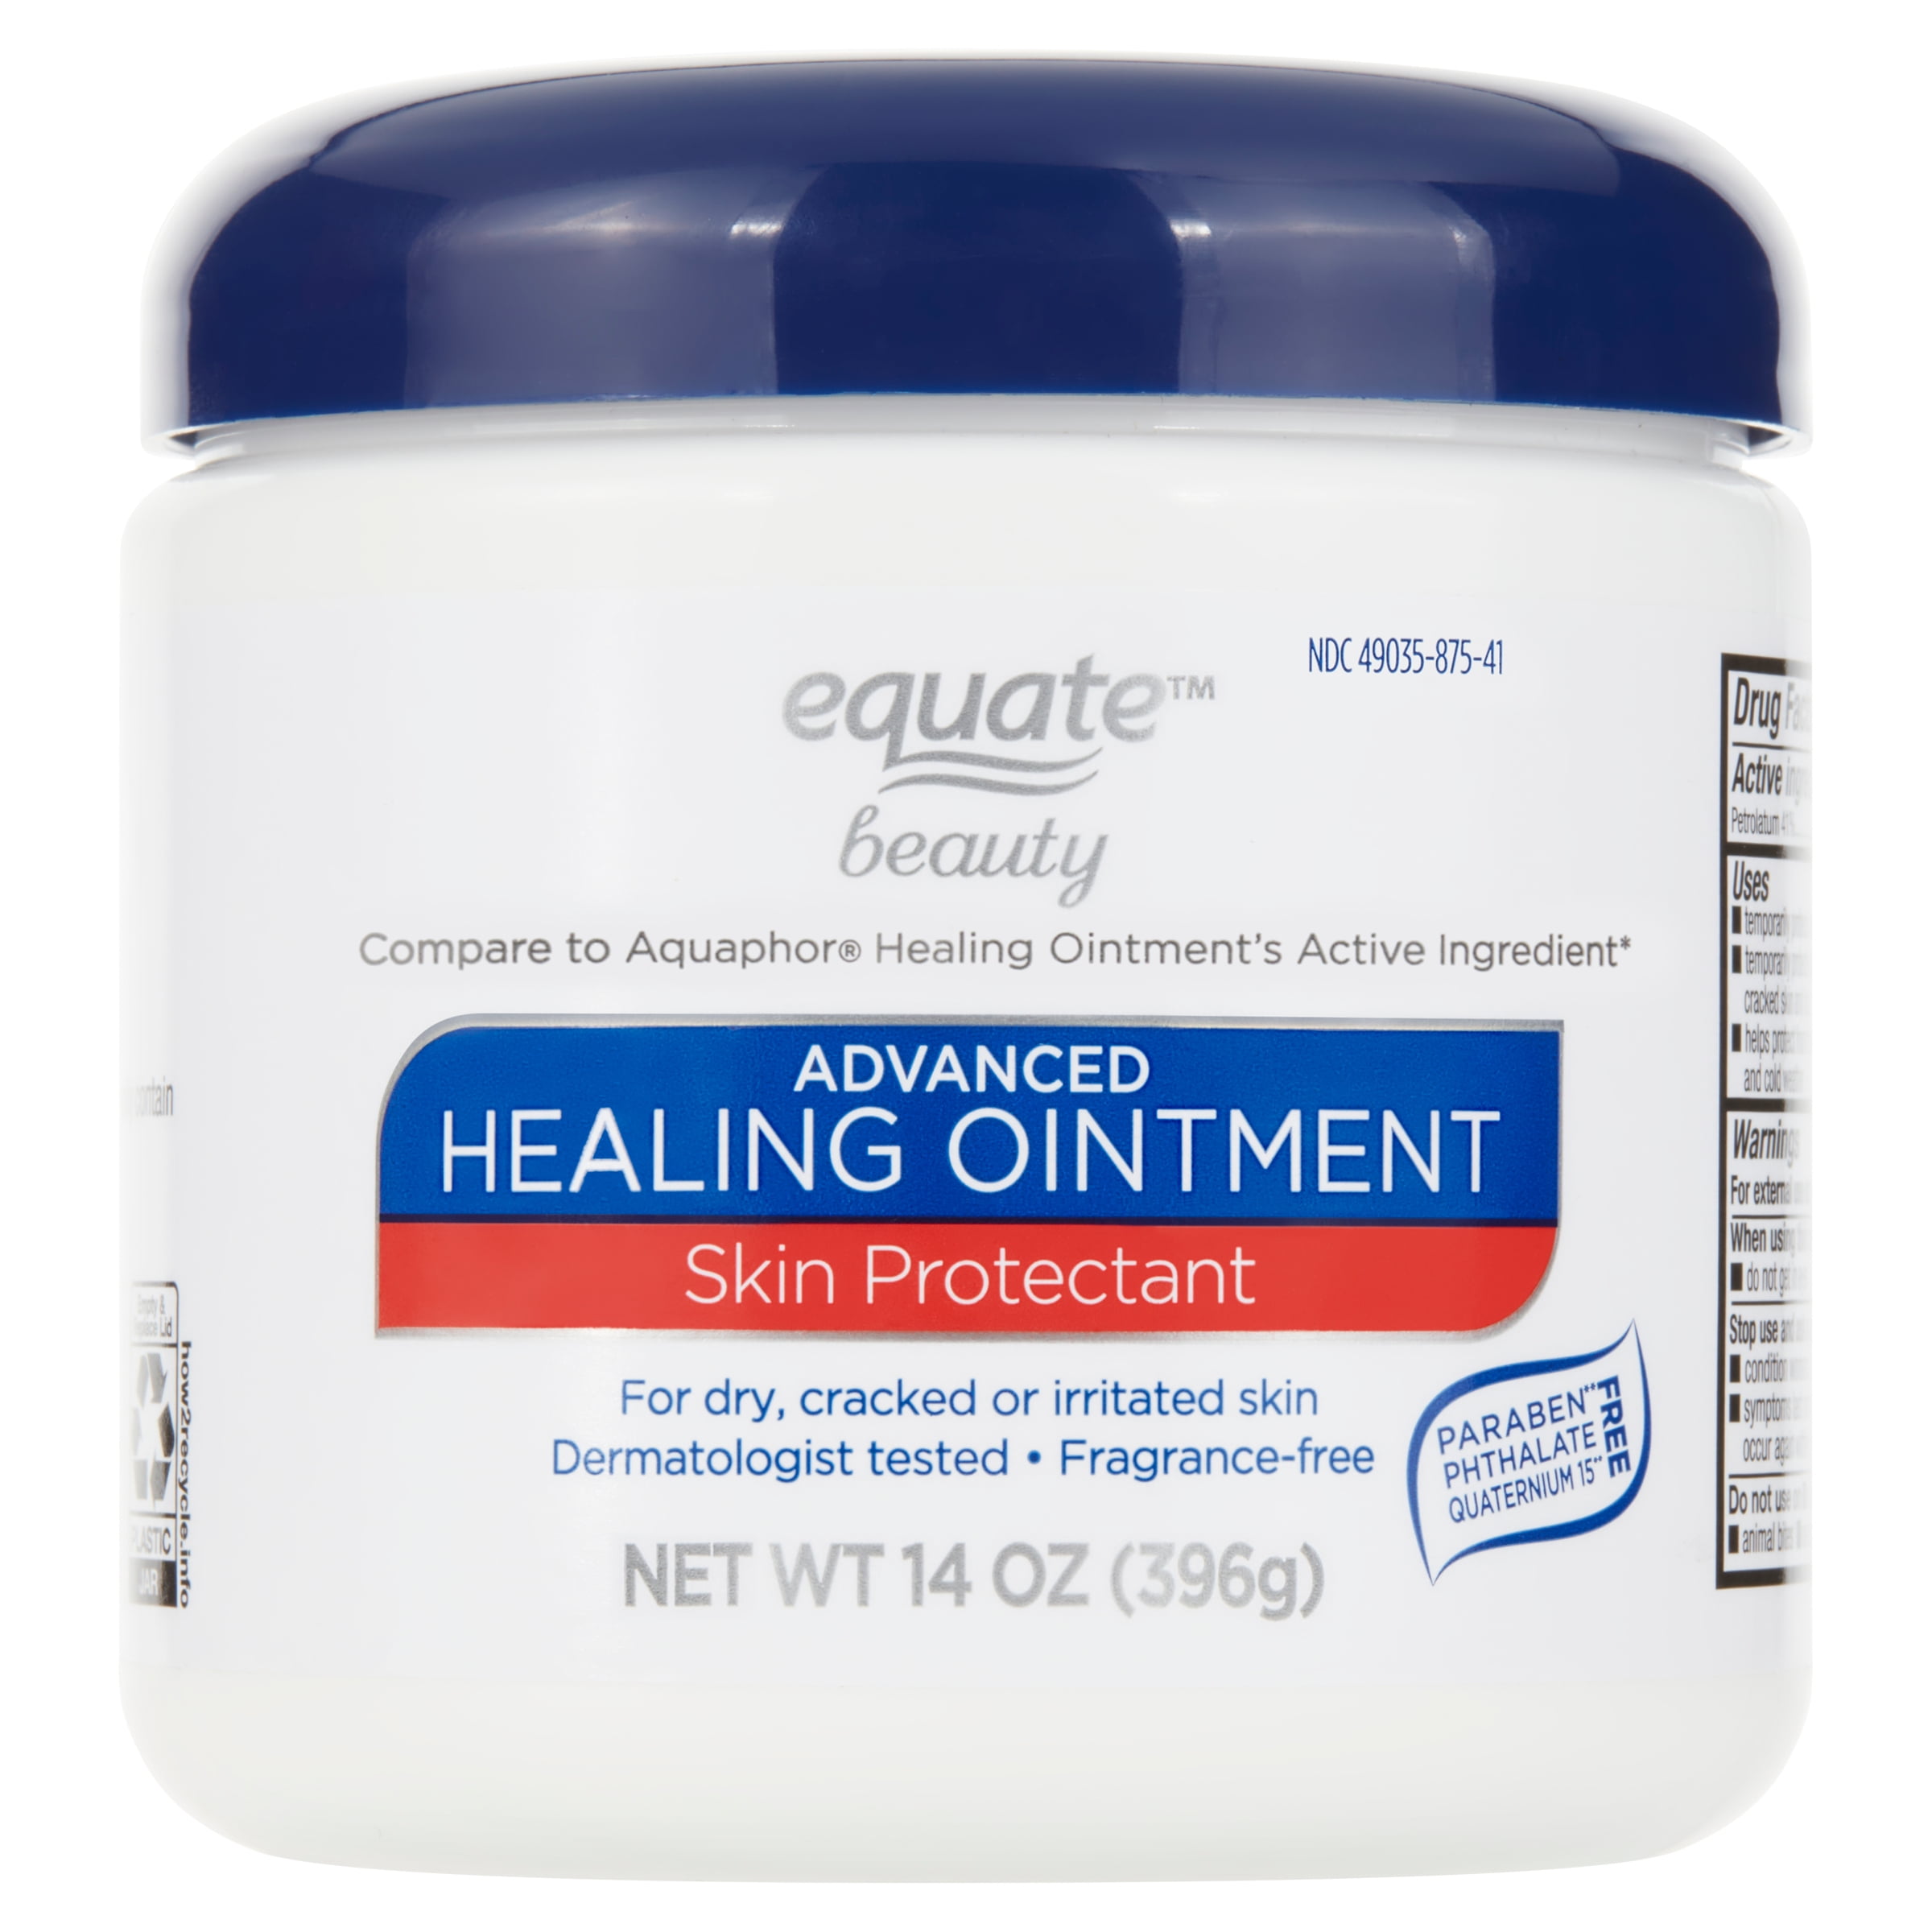 Equate beauty advanced healing ointment